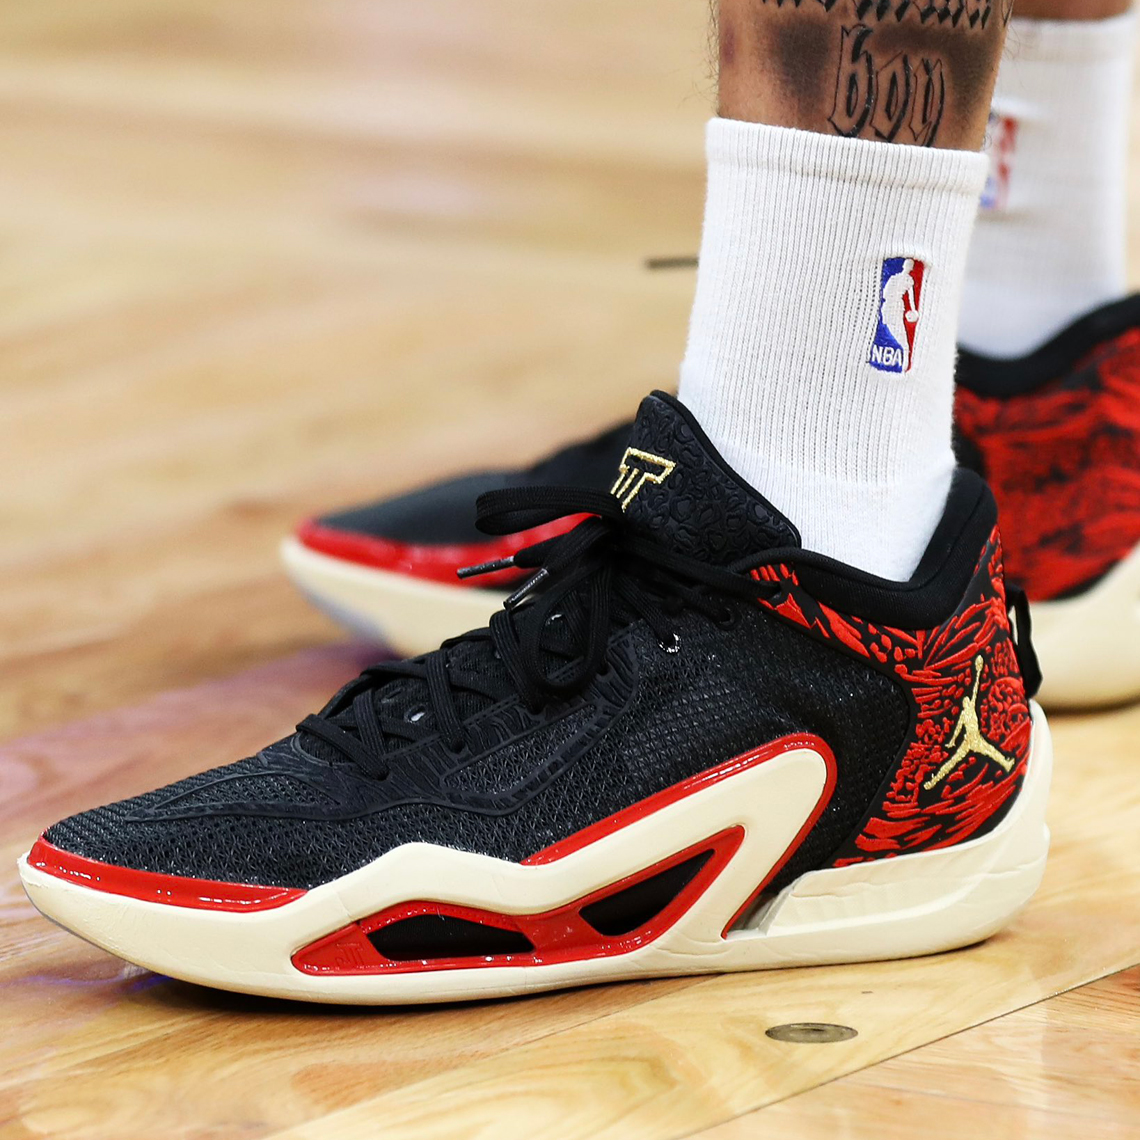 New Air Jordan Basketball Shoes | usapartners.metalbird.com